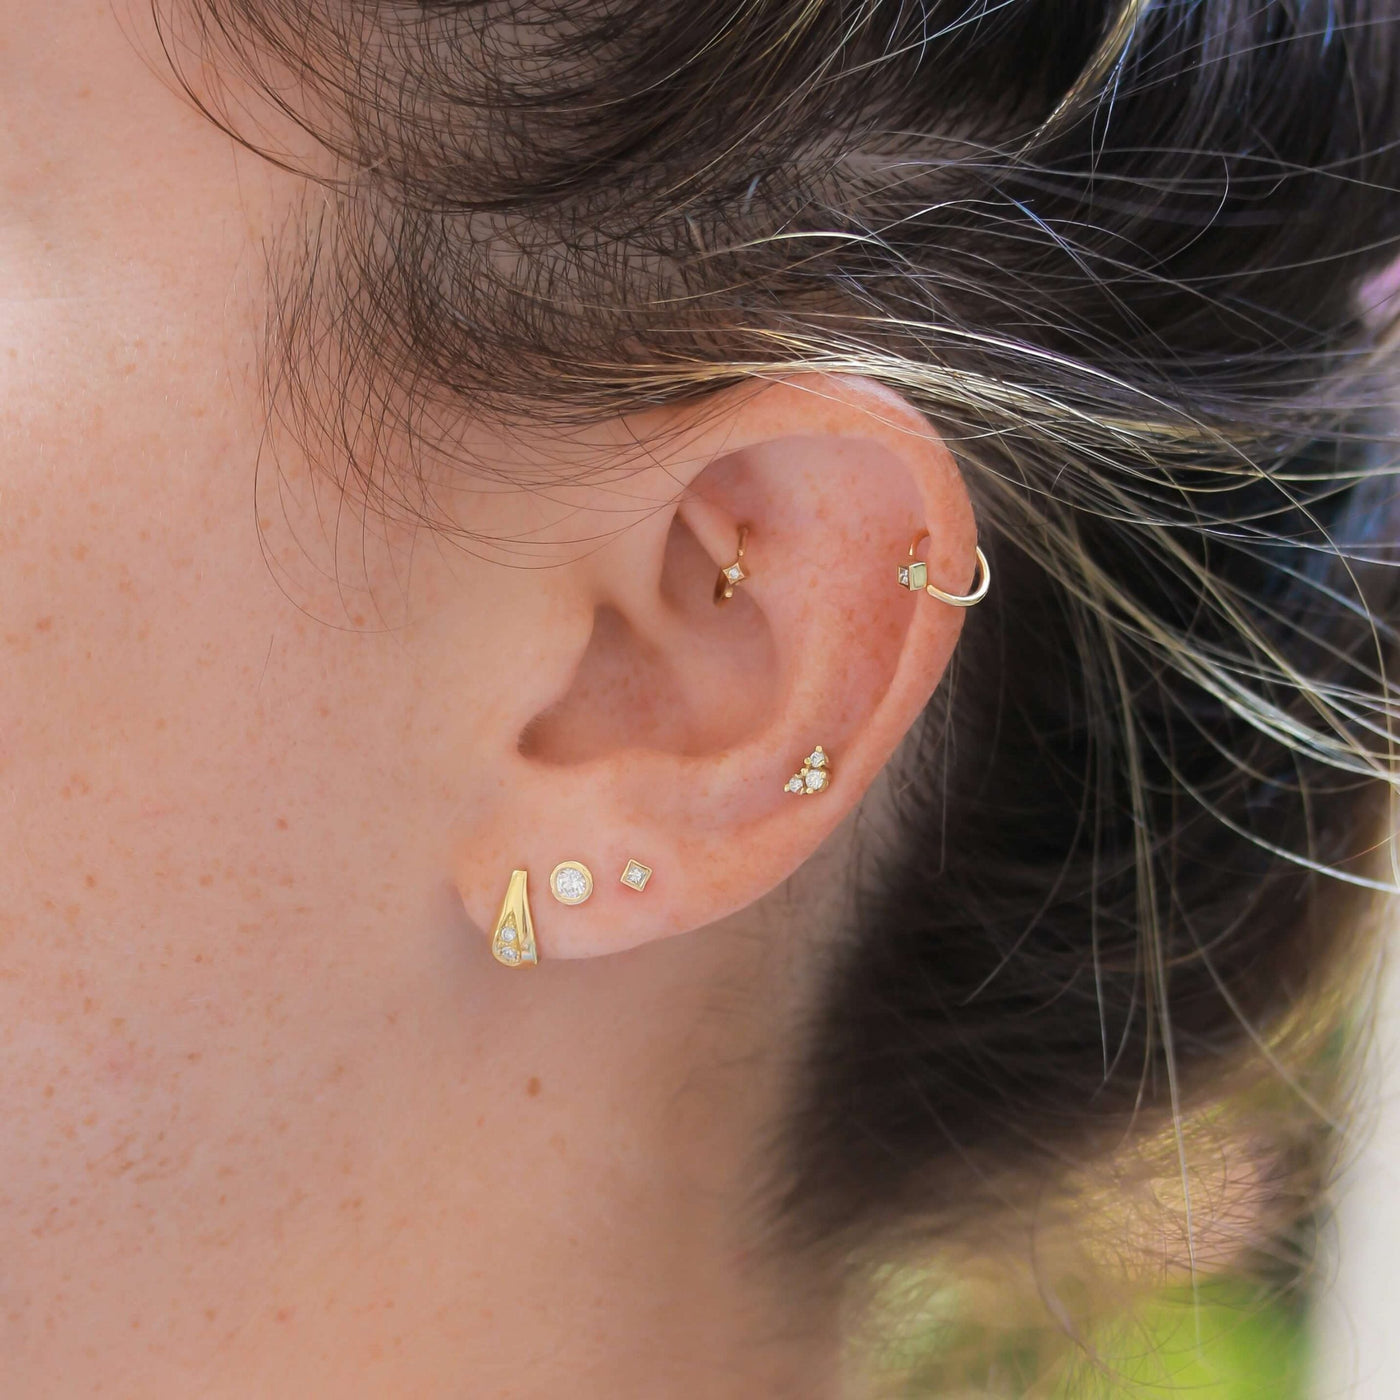 Mercury Piercing Earring 14K Gold Black & White Diamonds Earrings 